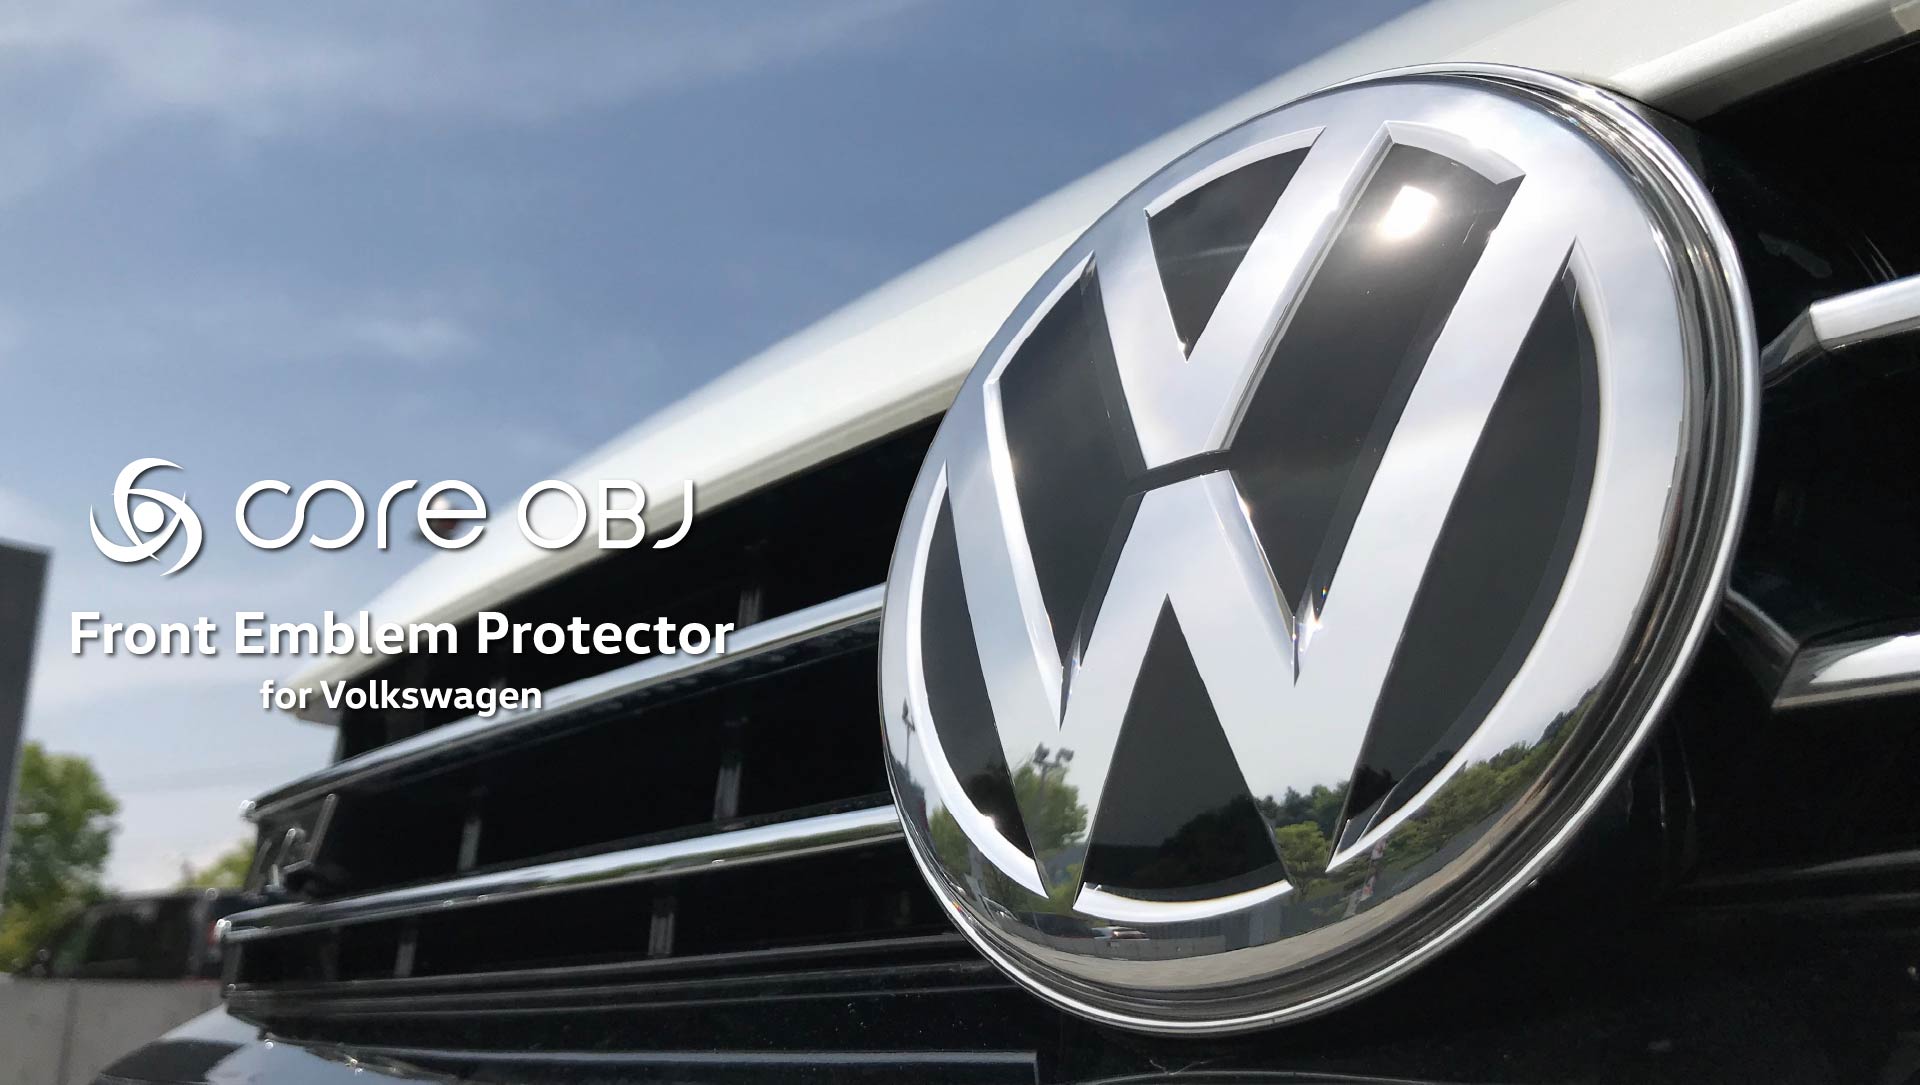 Front Emblem Protector for Volkswagen / core obj select